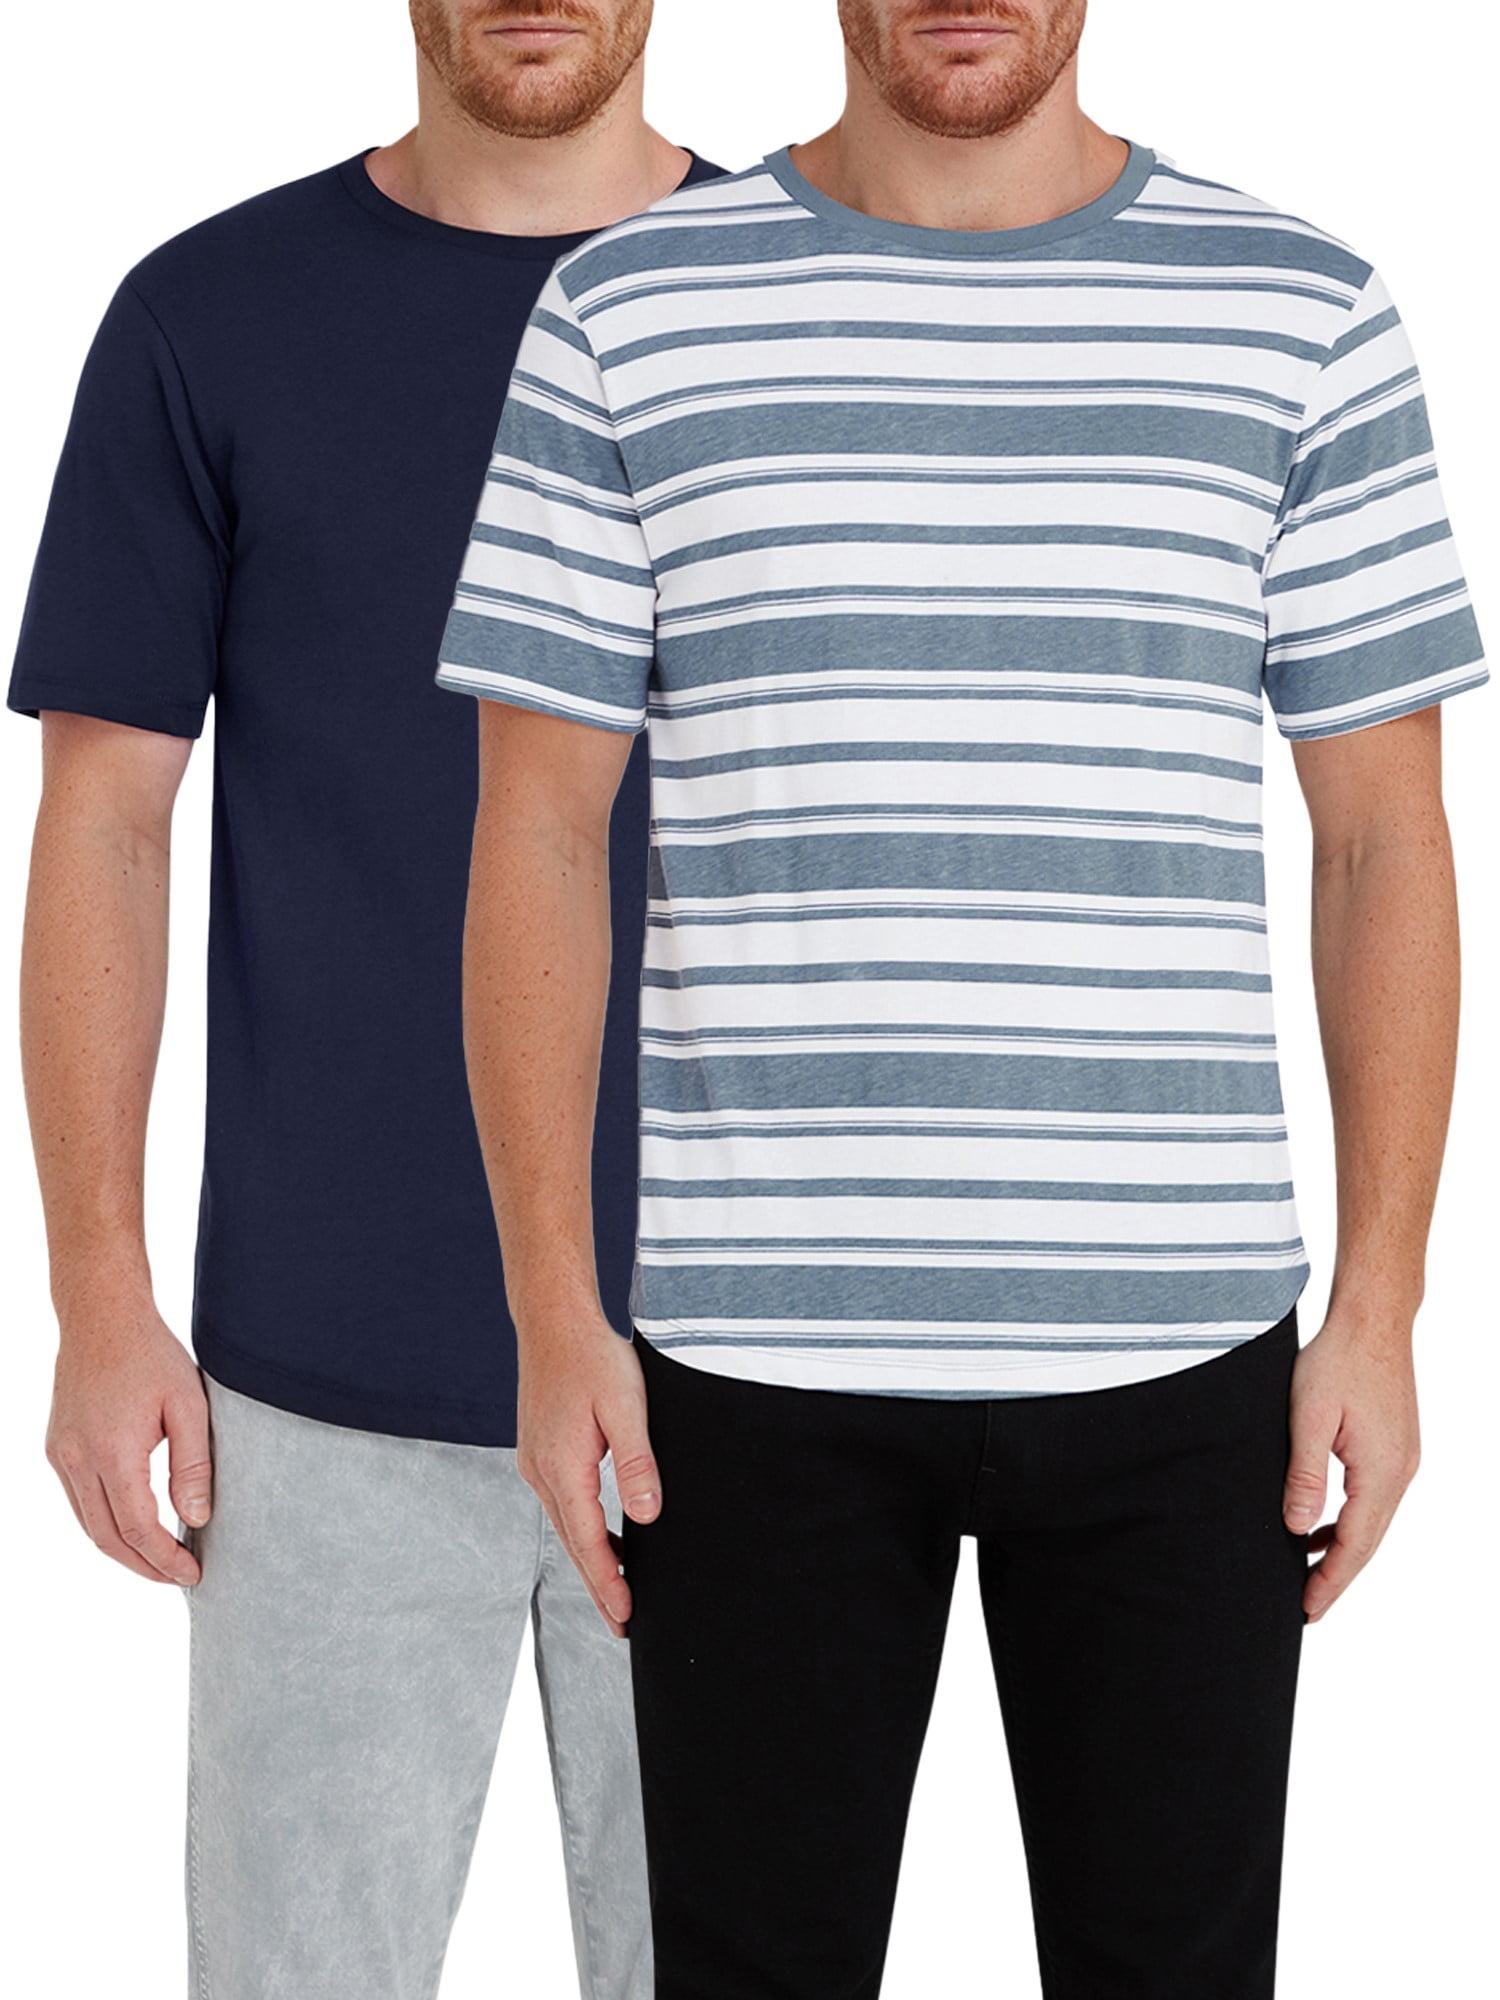 EPIC Studio Men's & Big Men's Longline Striped & T-Shirts, 2-Pack, Sizes XS-5XL, Mens Shirts Walmart.com